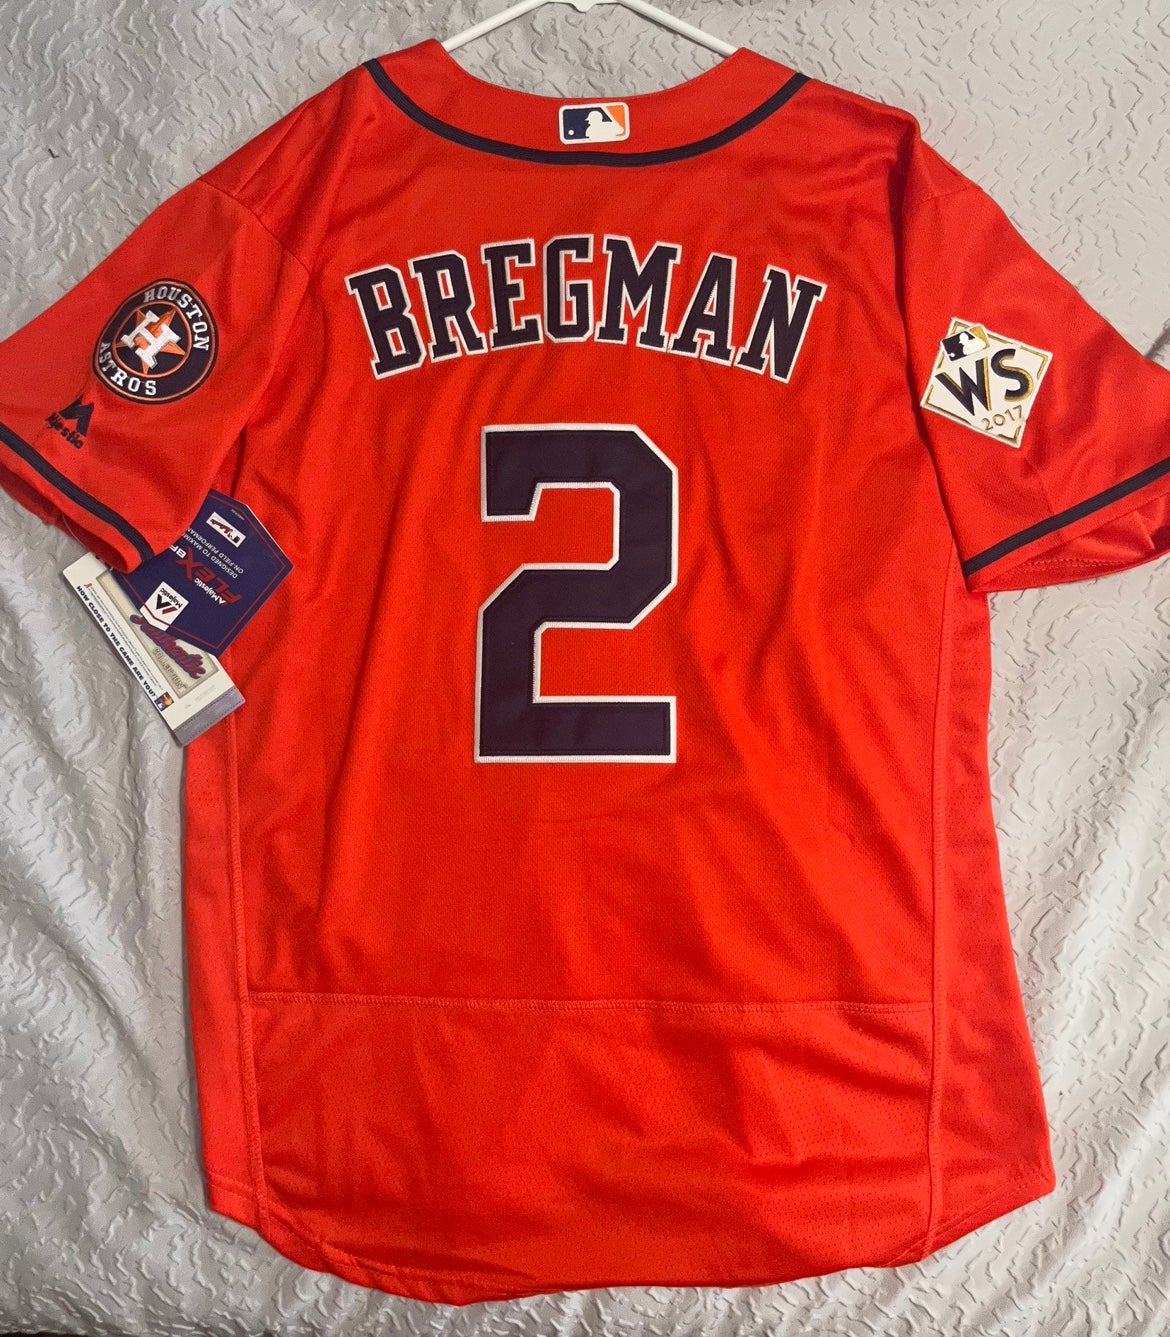 Women's Majestic Threads Alex Bregman Cream/Navy Houston Astros